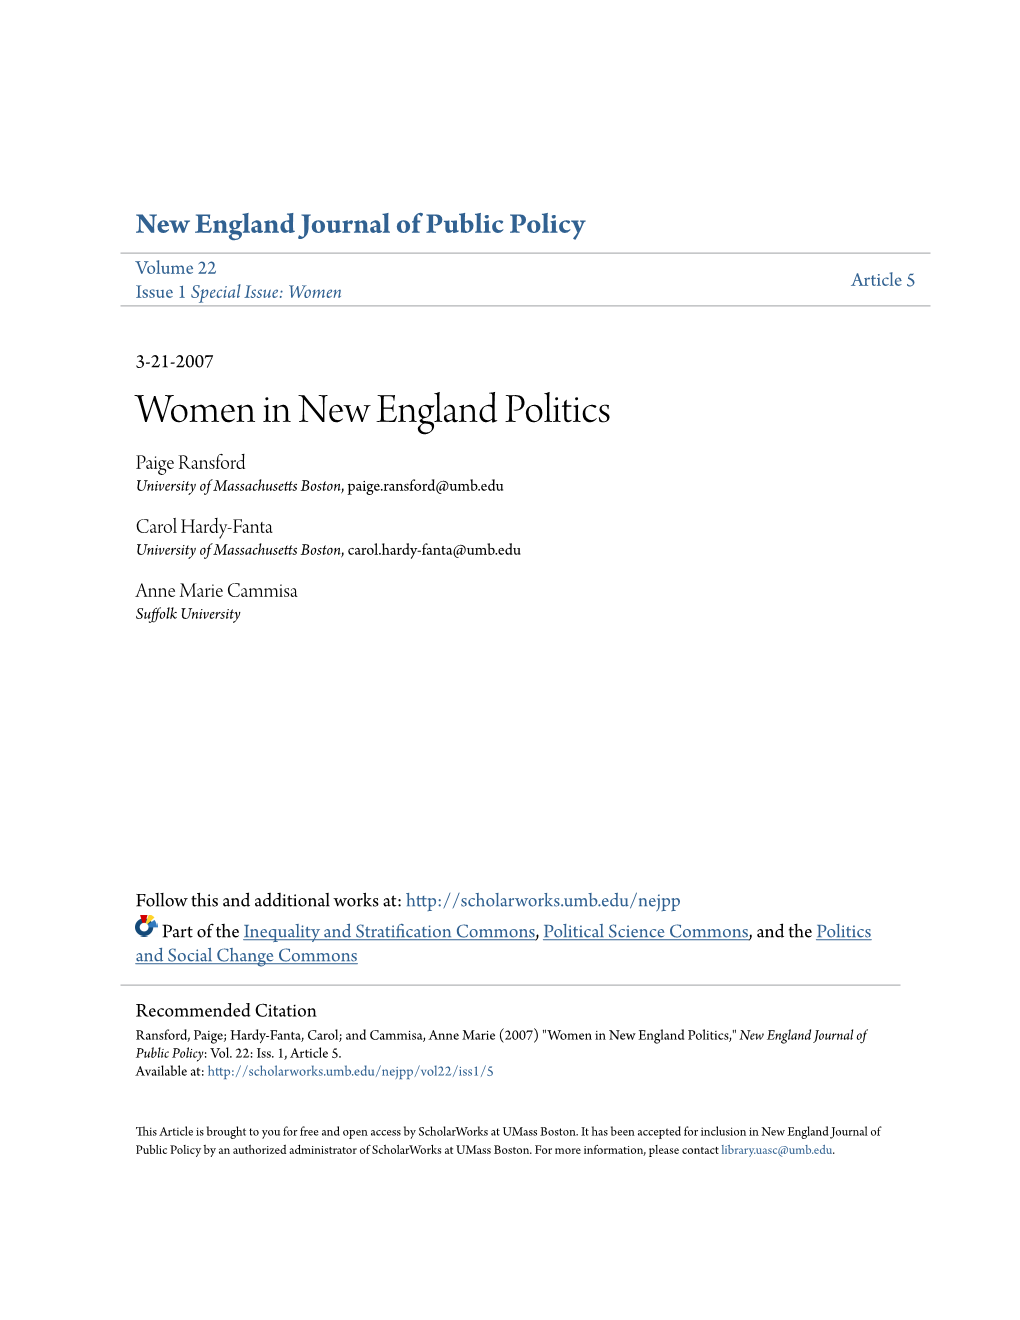 Women in New England Politics Paige Ransford University of Massachusetts Boston, Paige.Ransford@Umb.Edu